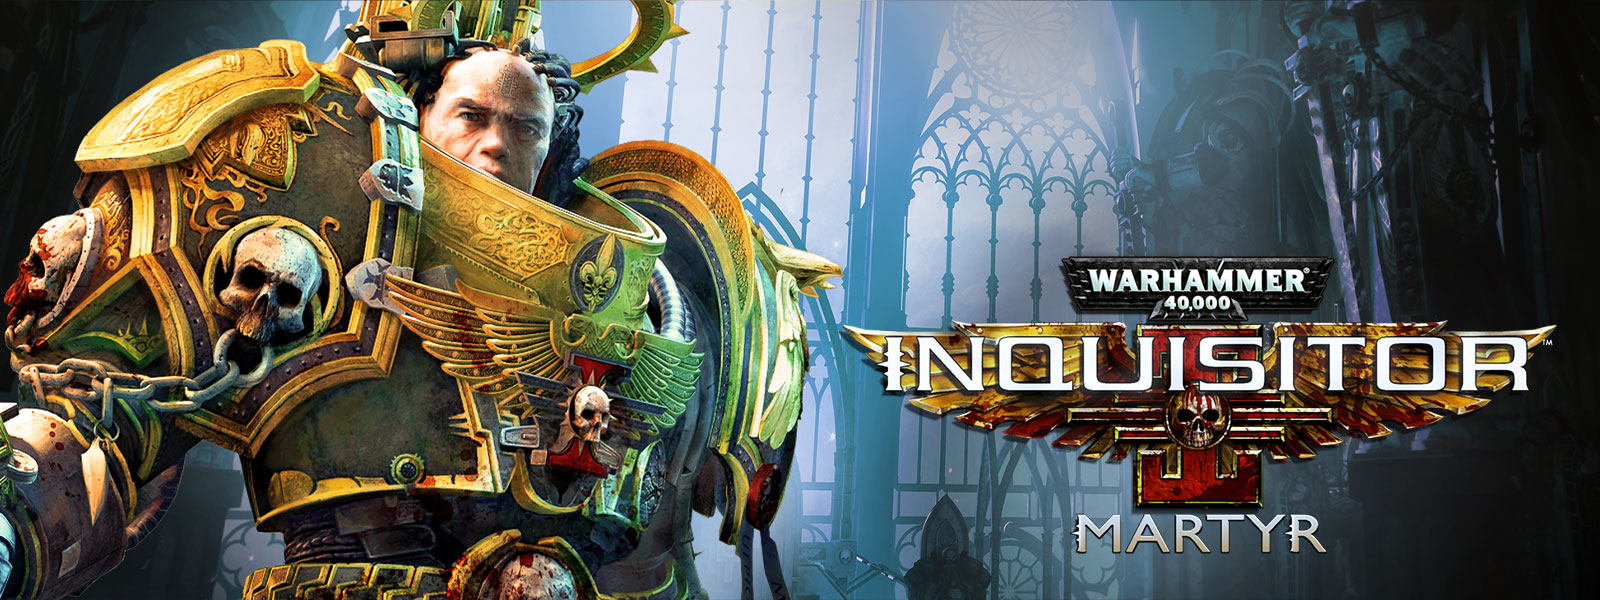 Warhammer 40,000: Inquisitor, Martyr, inkvizítor stojí v extravagantnej katedrále.